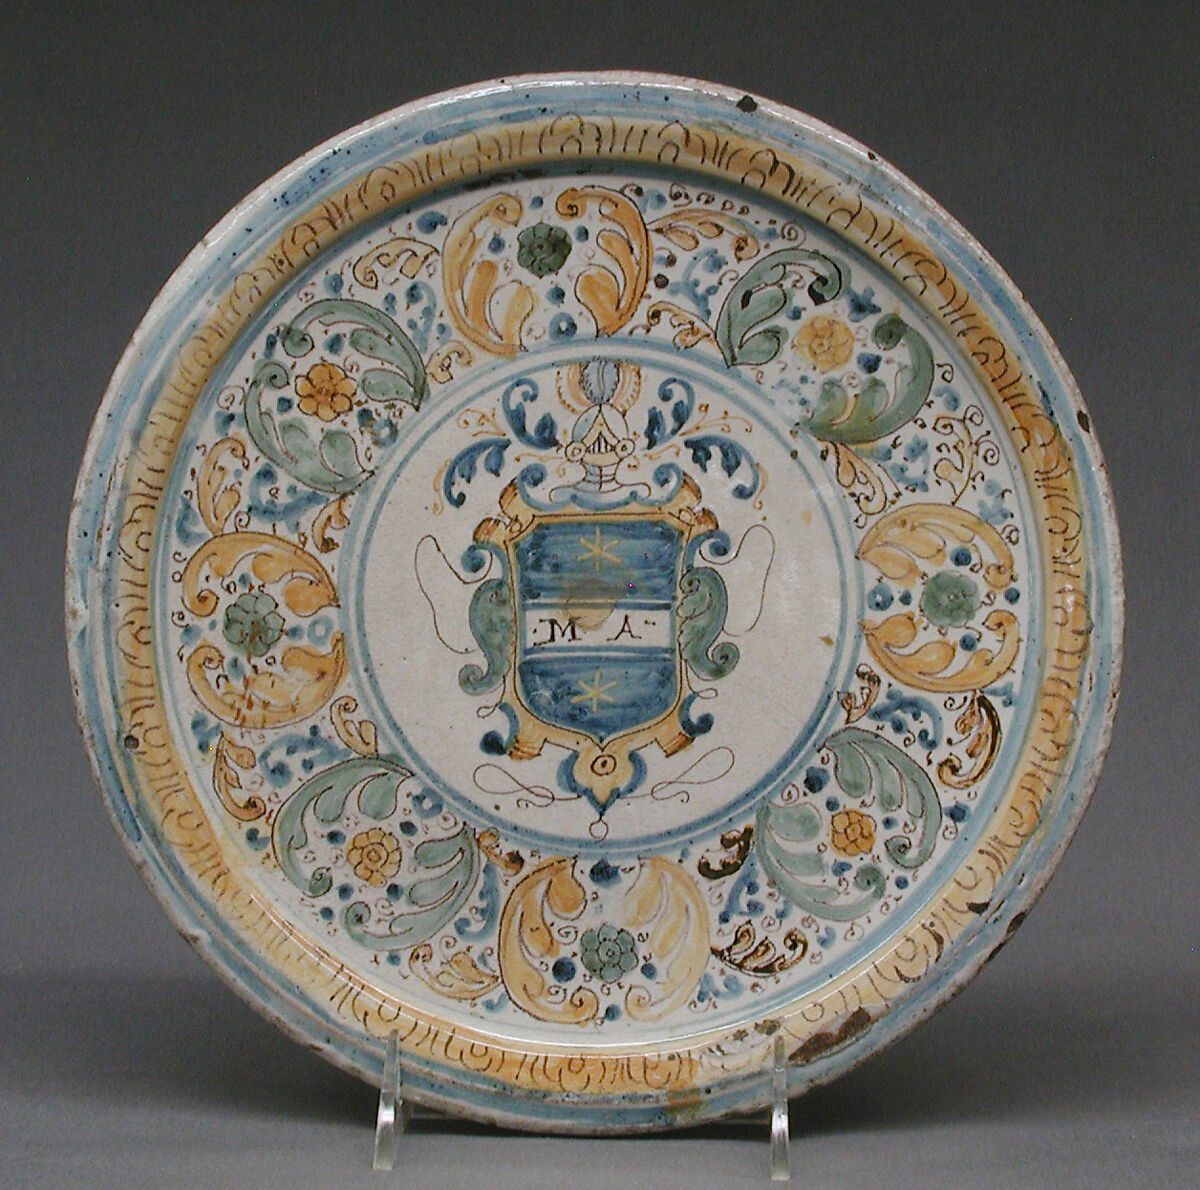 Tazza (Alzata), Glazed earthenware, probably Italian, Montelupo or possibly Spanish 